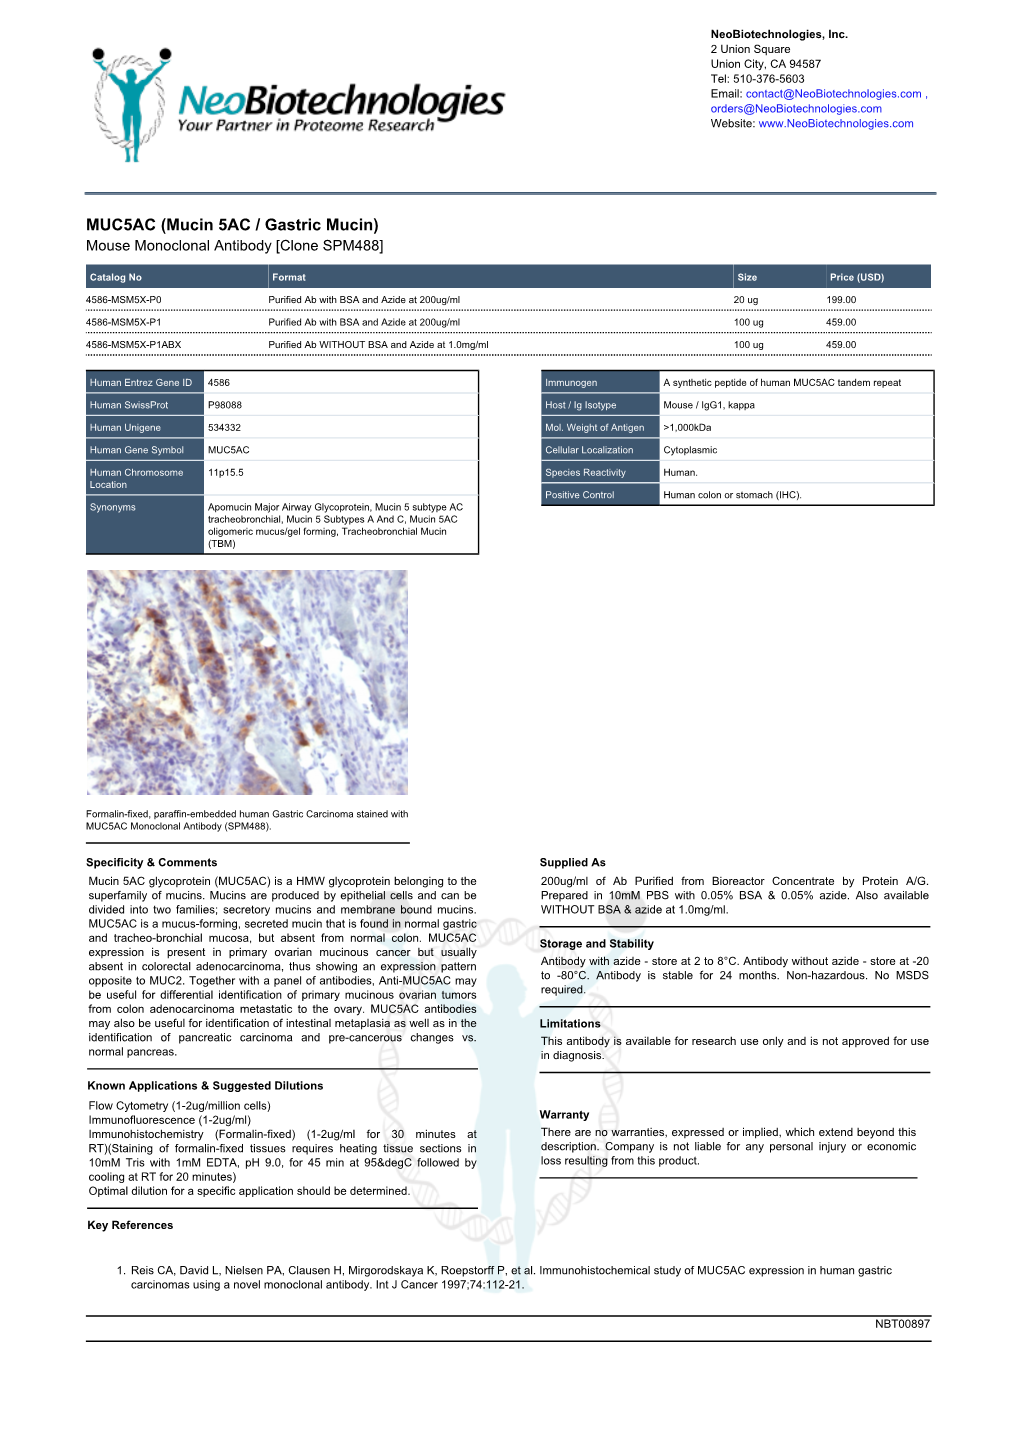 MUC5AC (Mucin 5AC / Gastric Mucin) Mouse Monoclonal Antibody [Clone SPM488]